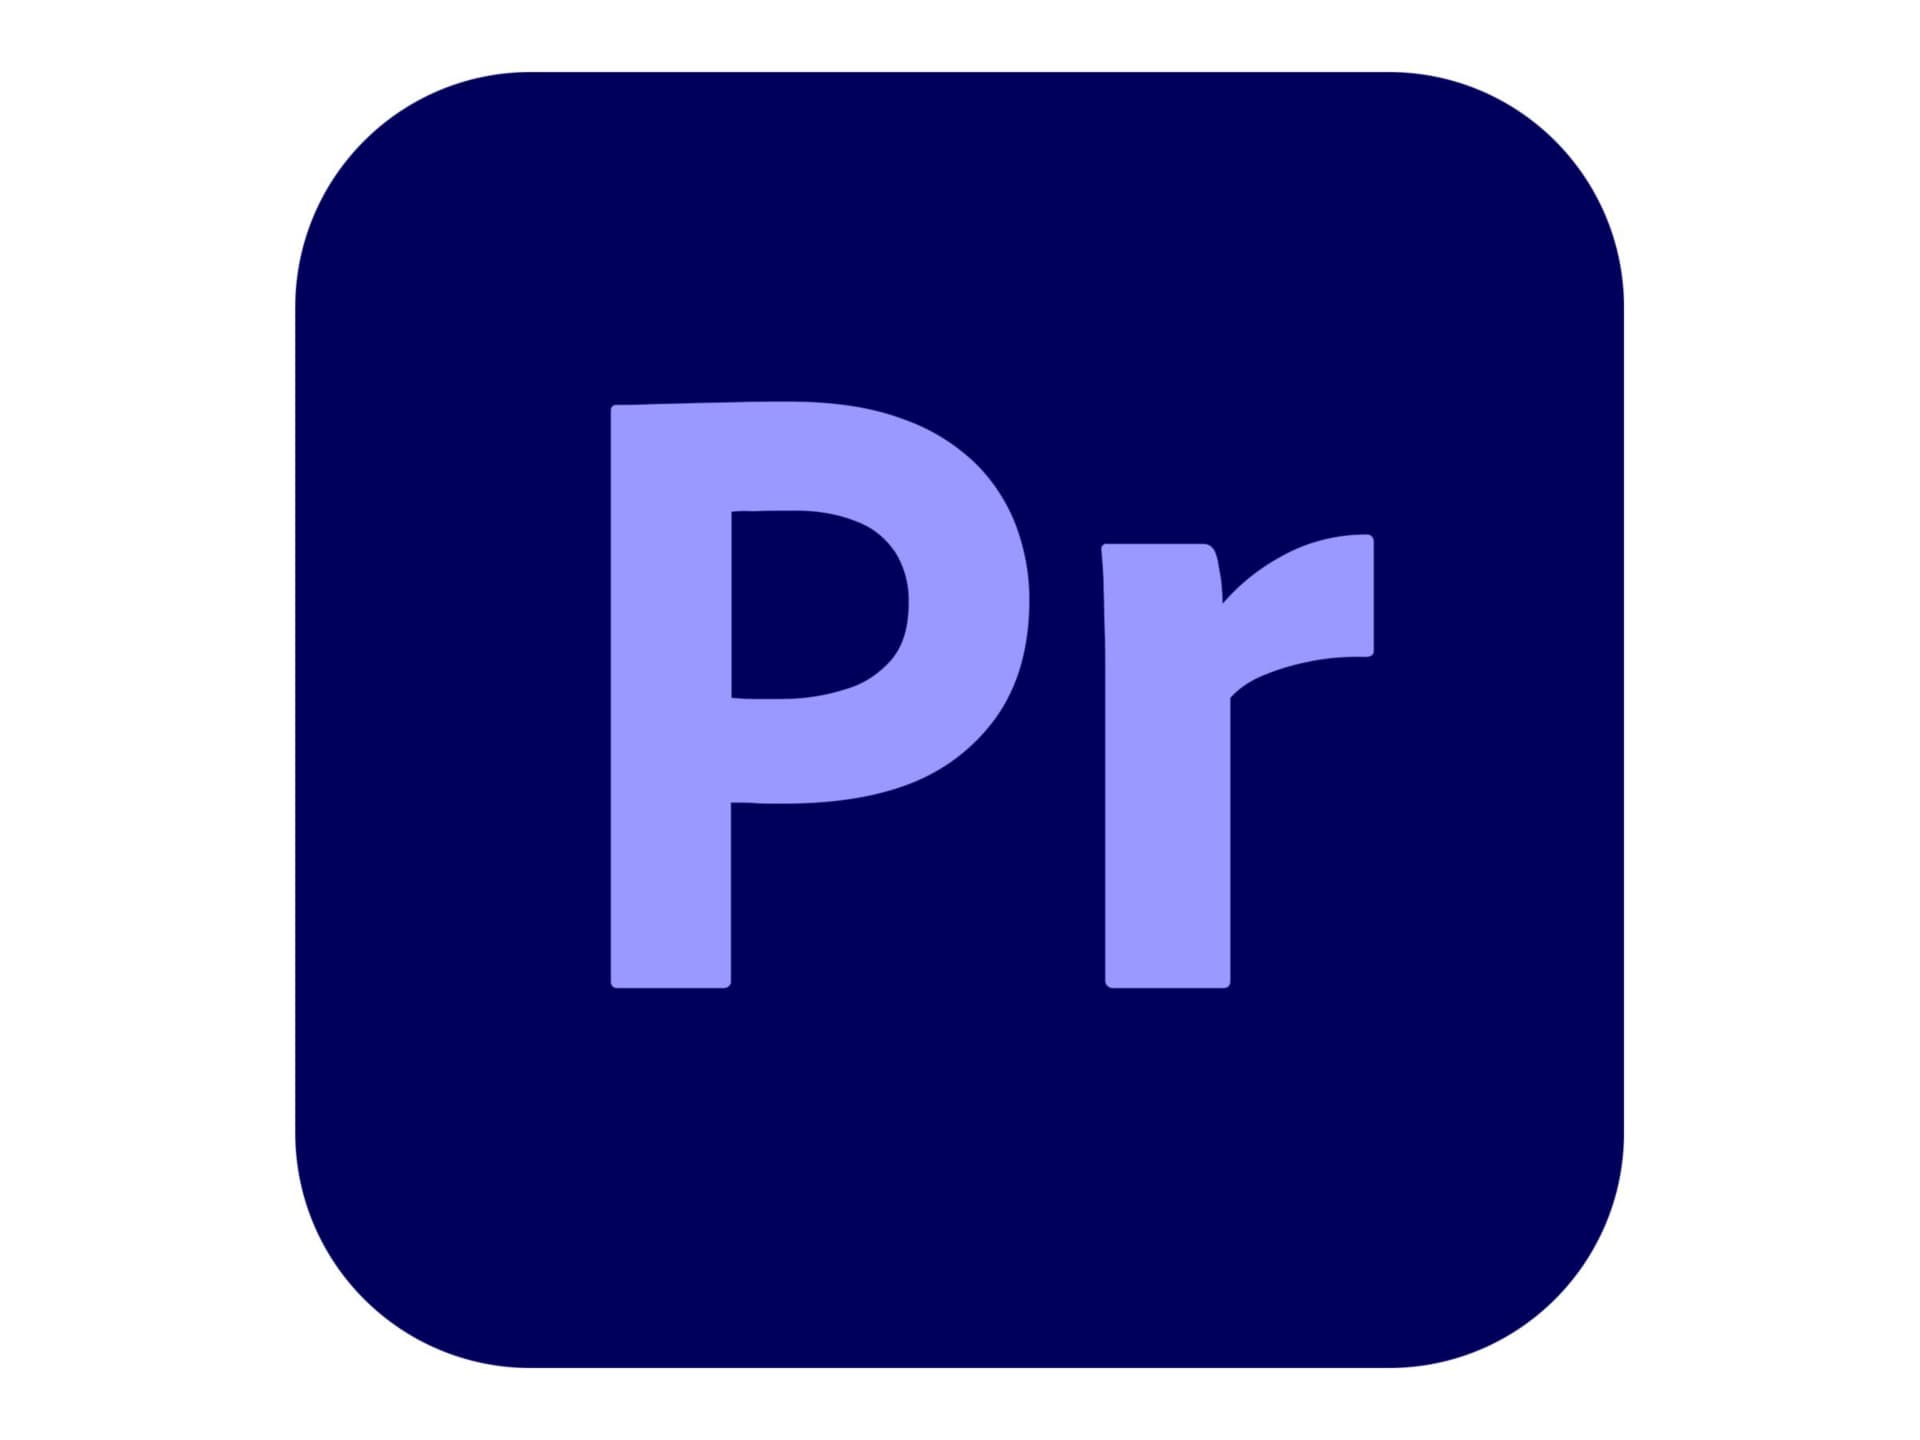 Adobe Premiere Pro CC for Enterprise - Subscription New (2 months) - 1 named user